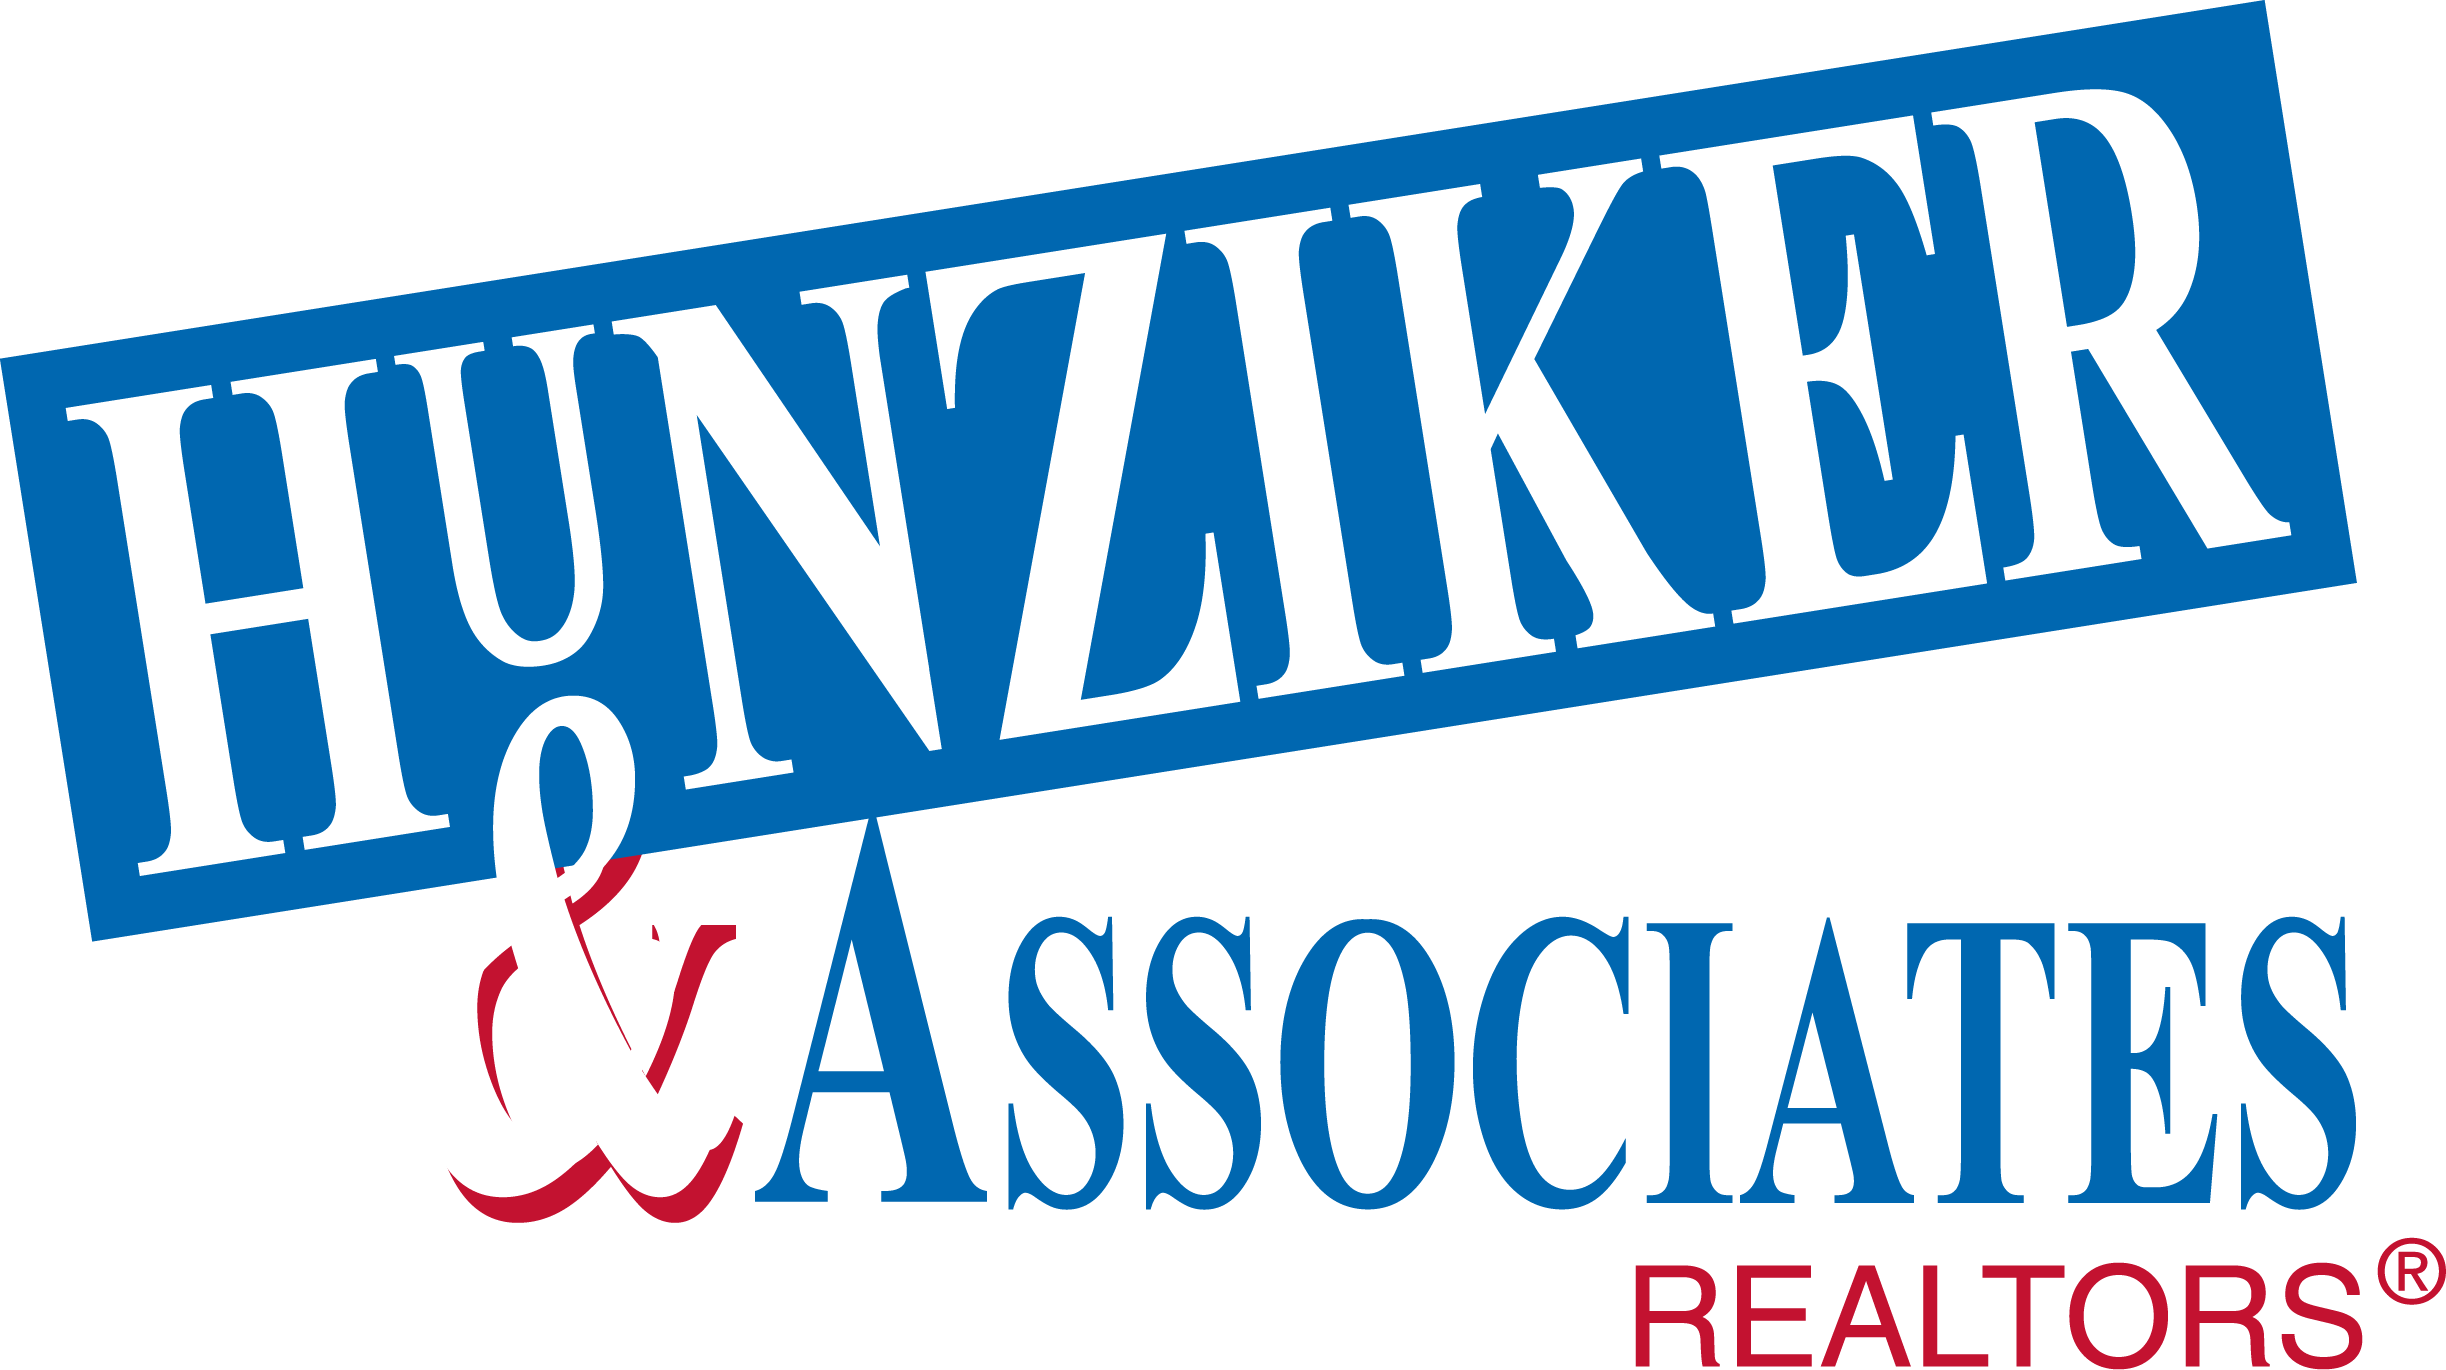 Hunziker & Associates, Realtors